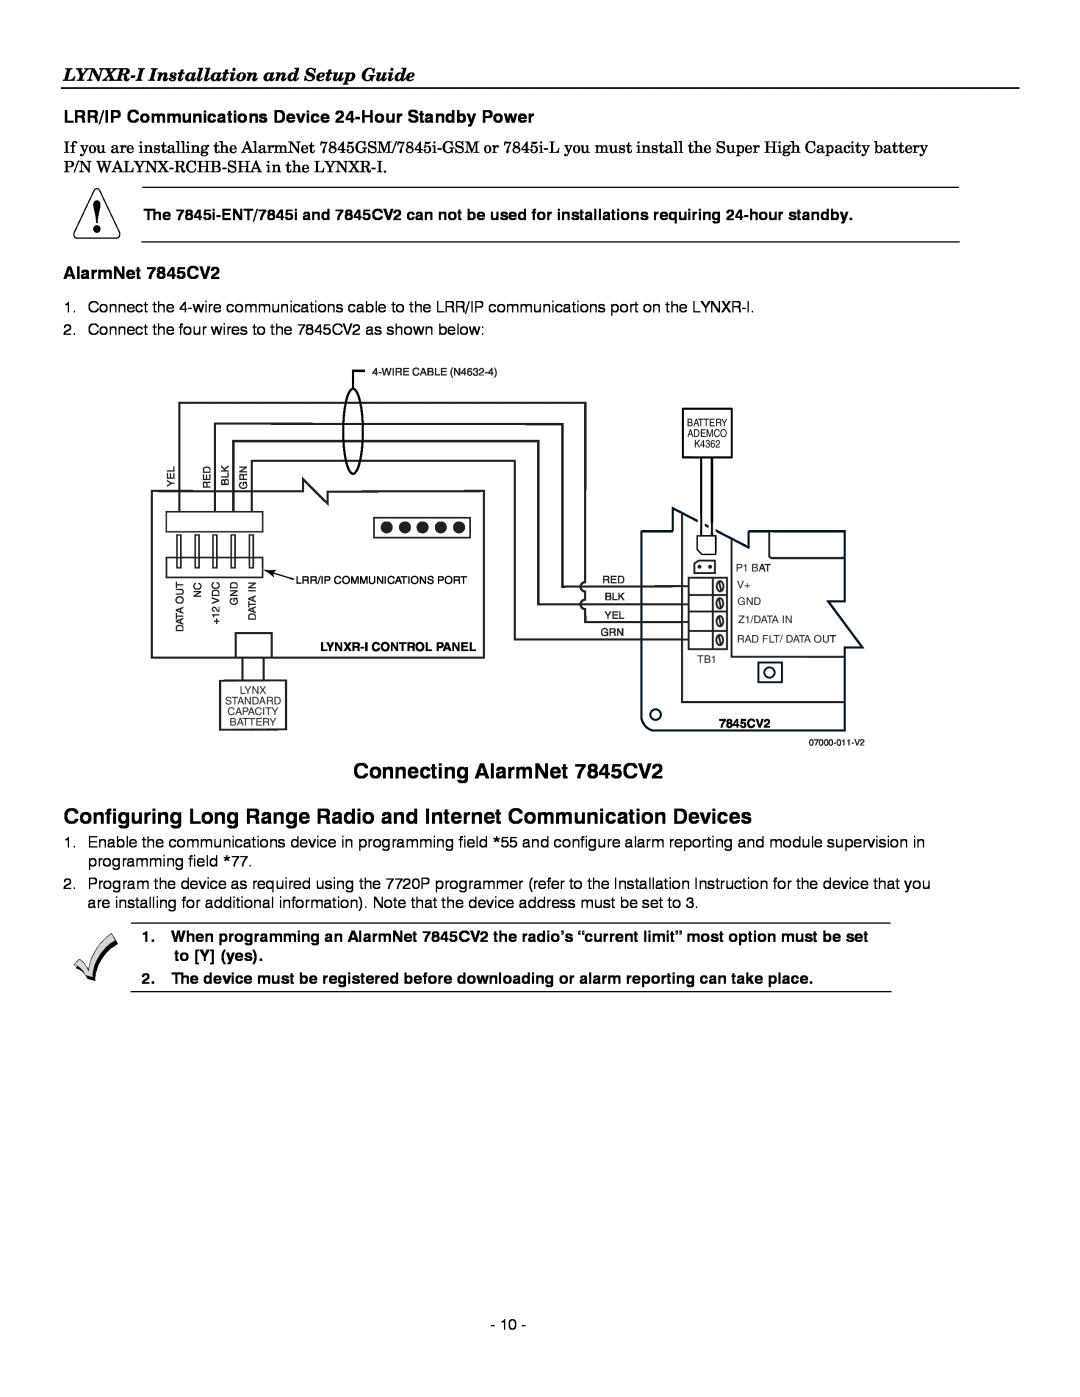 Honeywell K14114 3/06 Rev.B setup guide Connecting AlarmNet 7845CV2, LRR/IP Communications Device 24-HourStandby Power 